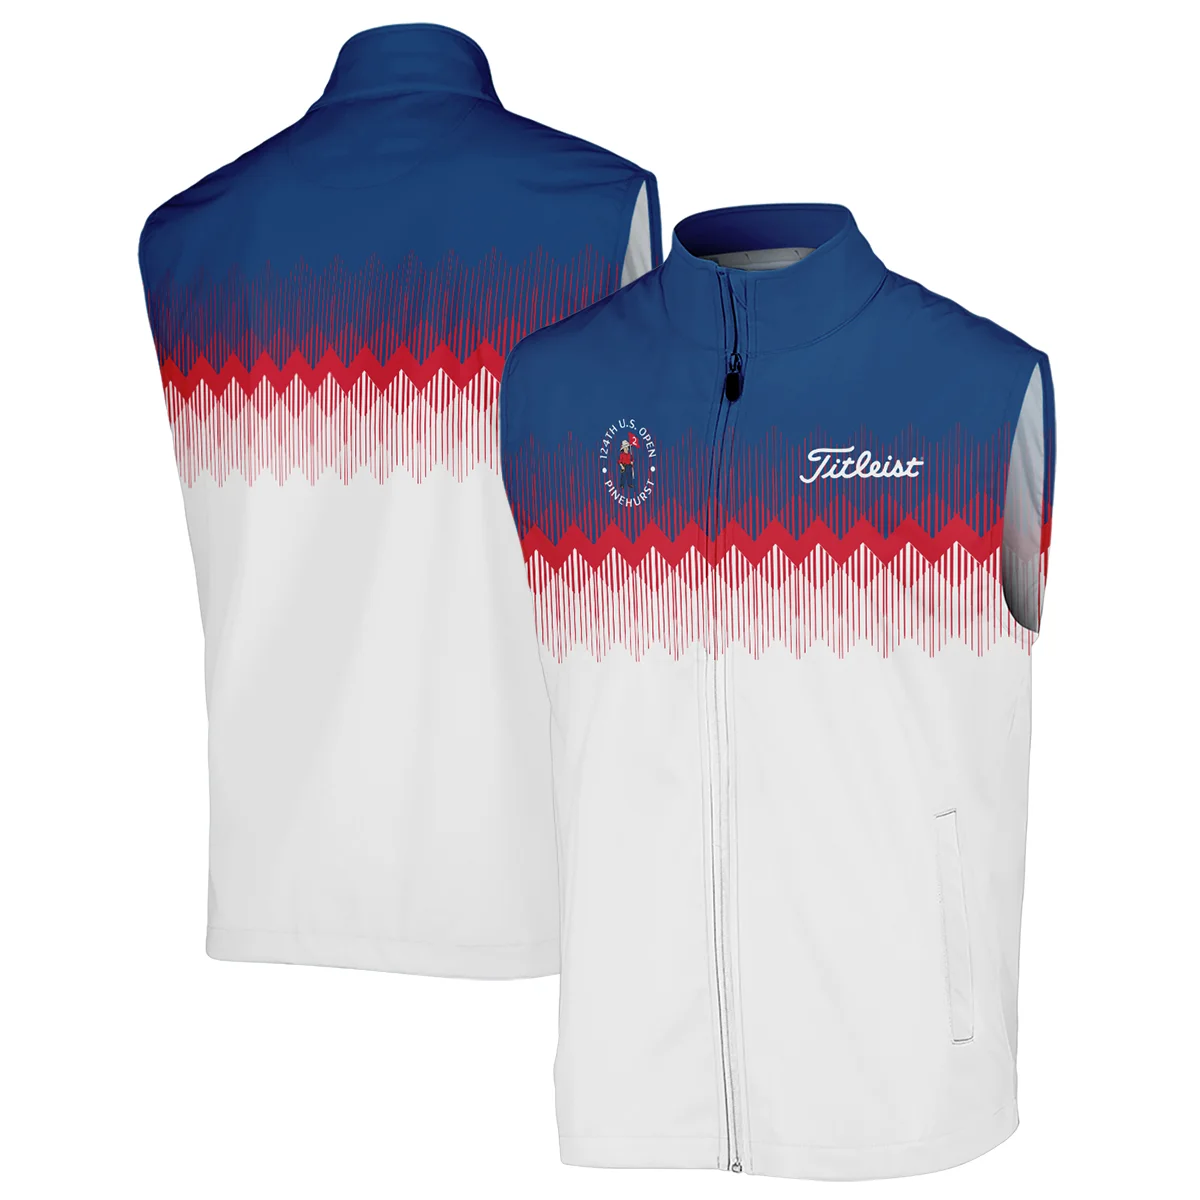 Titleist 124th U.S. Open Pinehurst Unisex Sweatshirt Blue Red Fabric Pattern Golf Sweatshirt